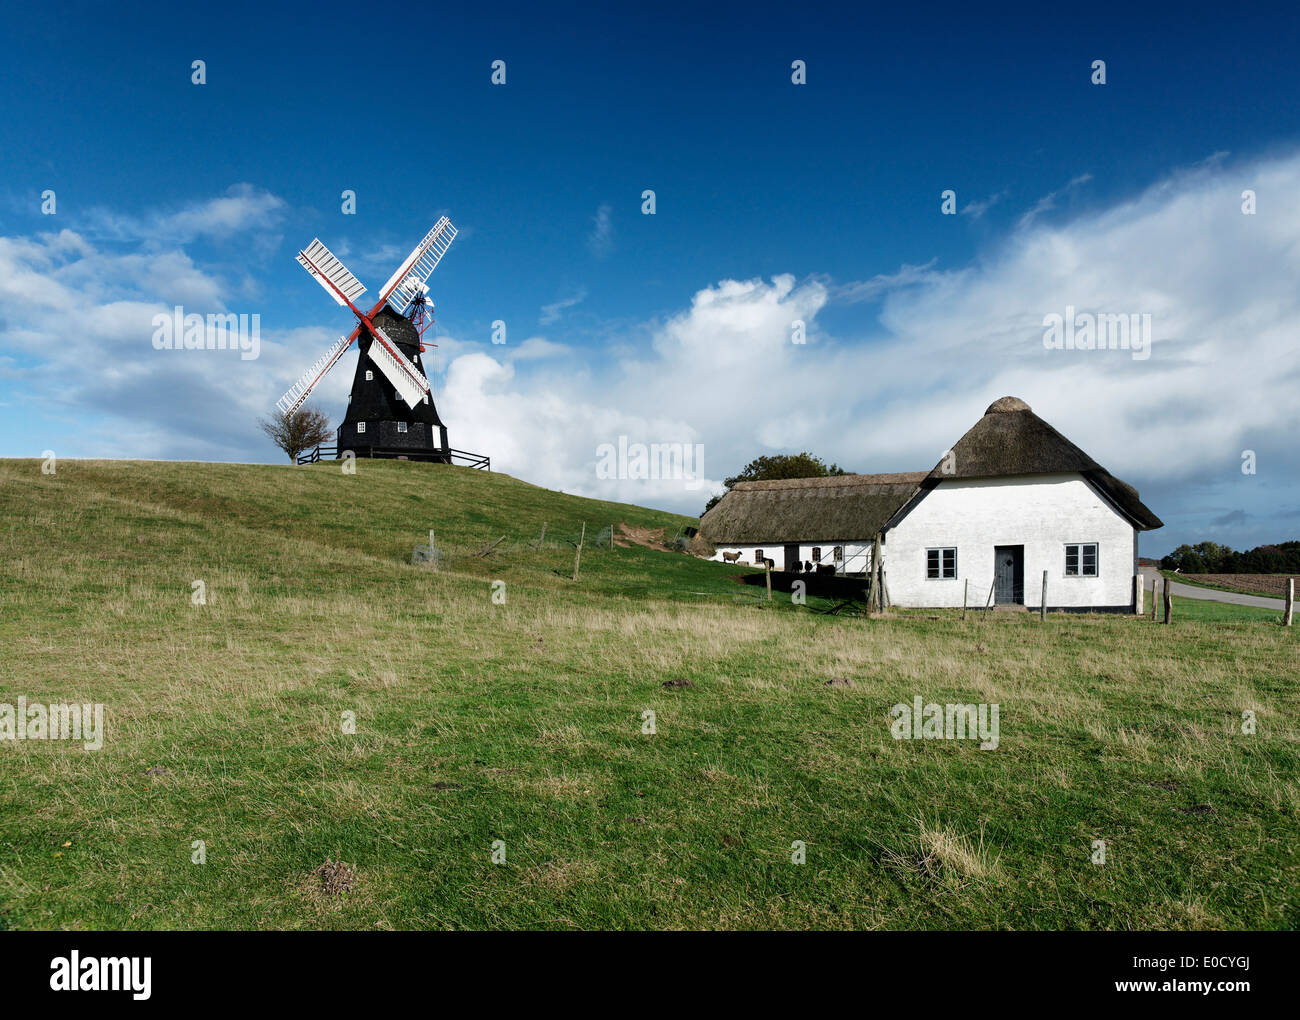 Windmill and house under blue sky, Hennetved, Island of Langeland, Denmark, Europe Stock Photo